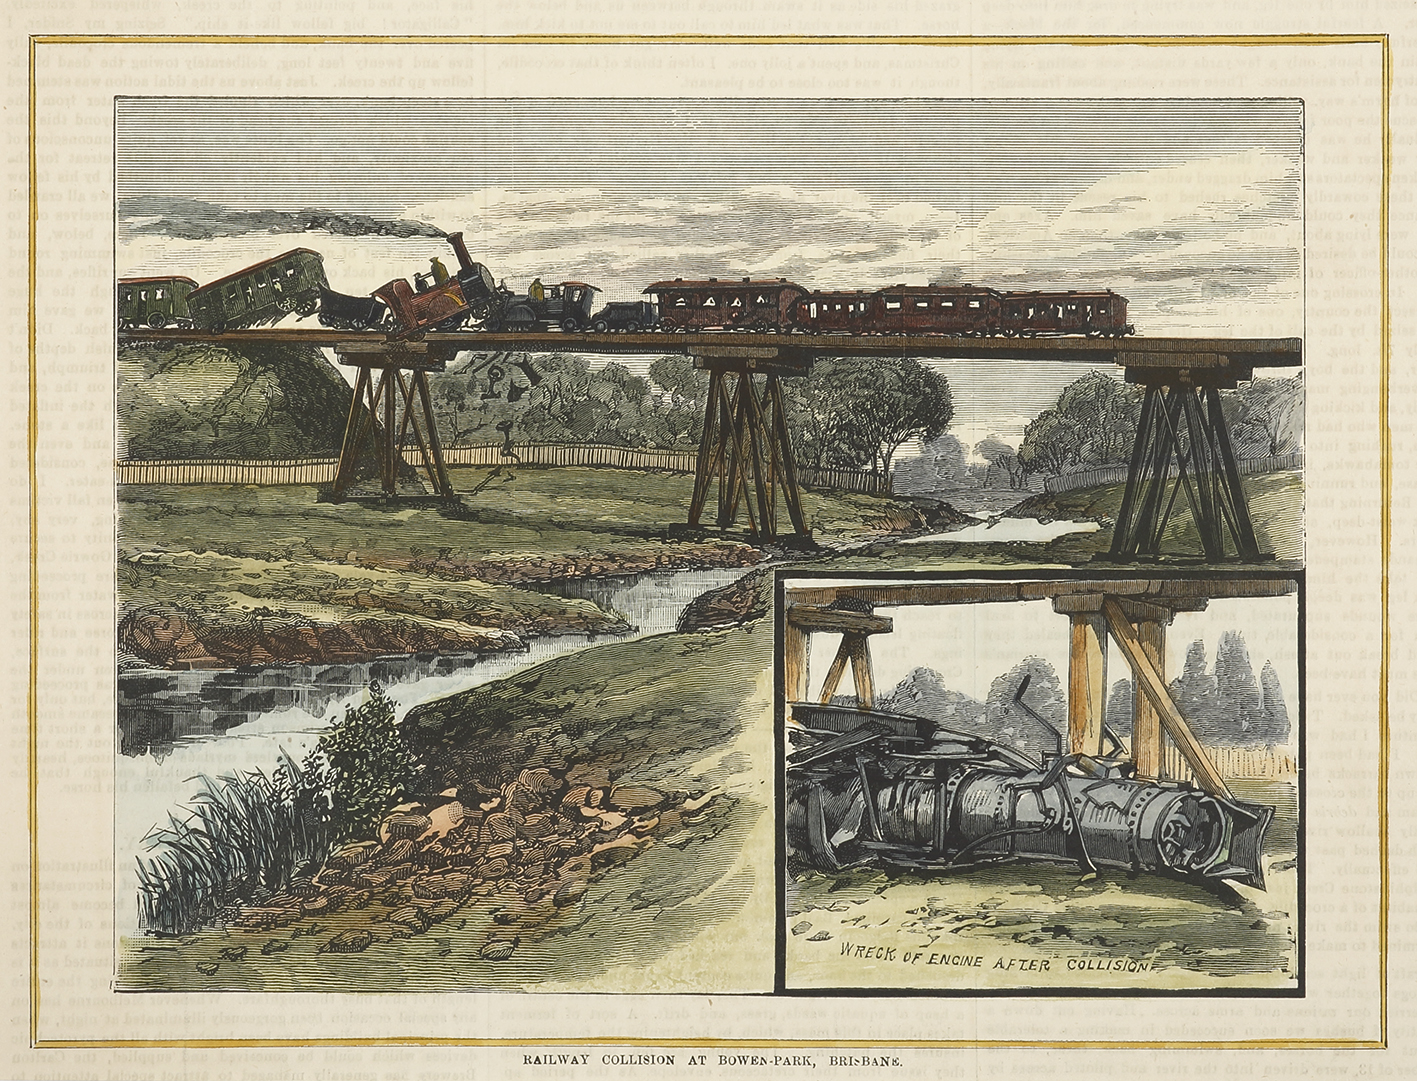 Railway collision at Bowen-Park, Brisbane. - Antique View from 1883